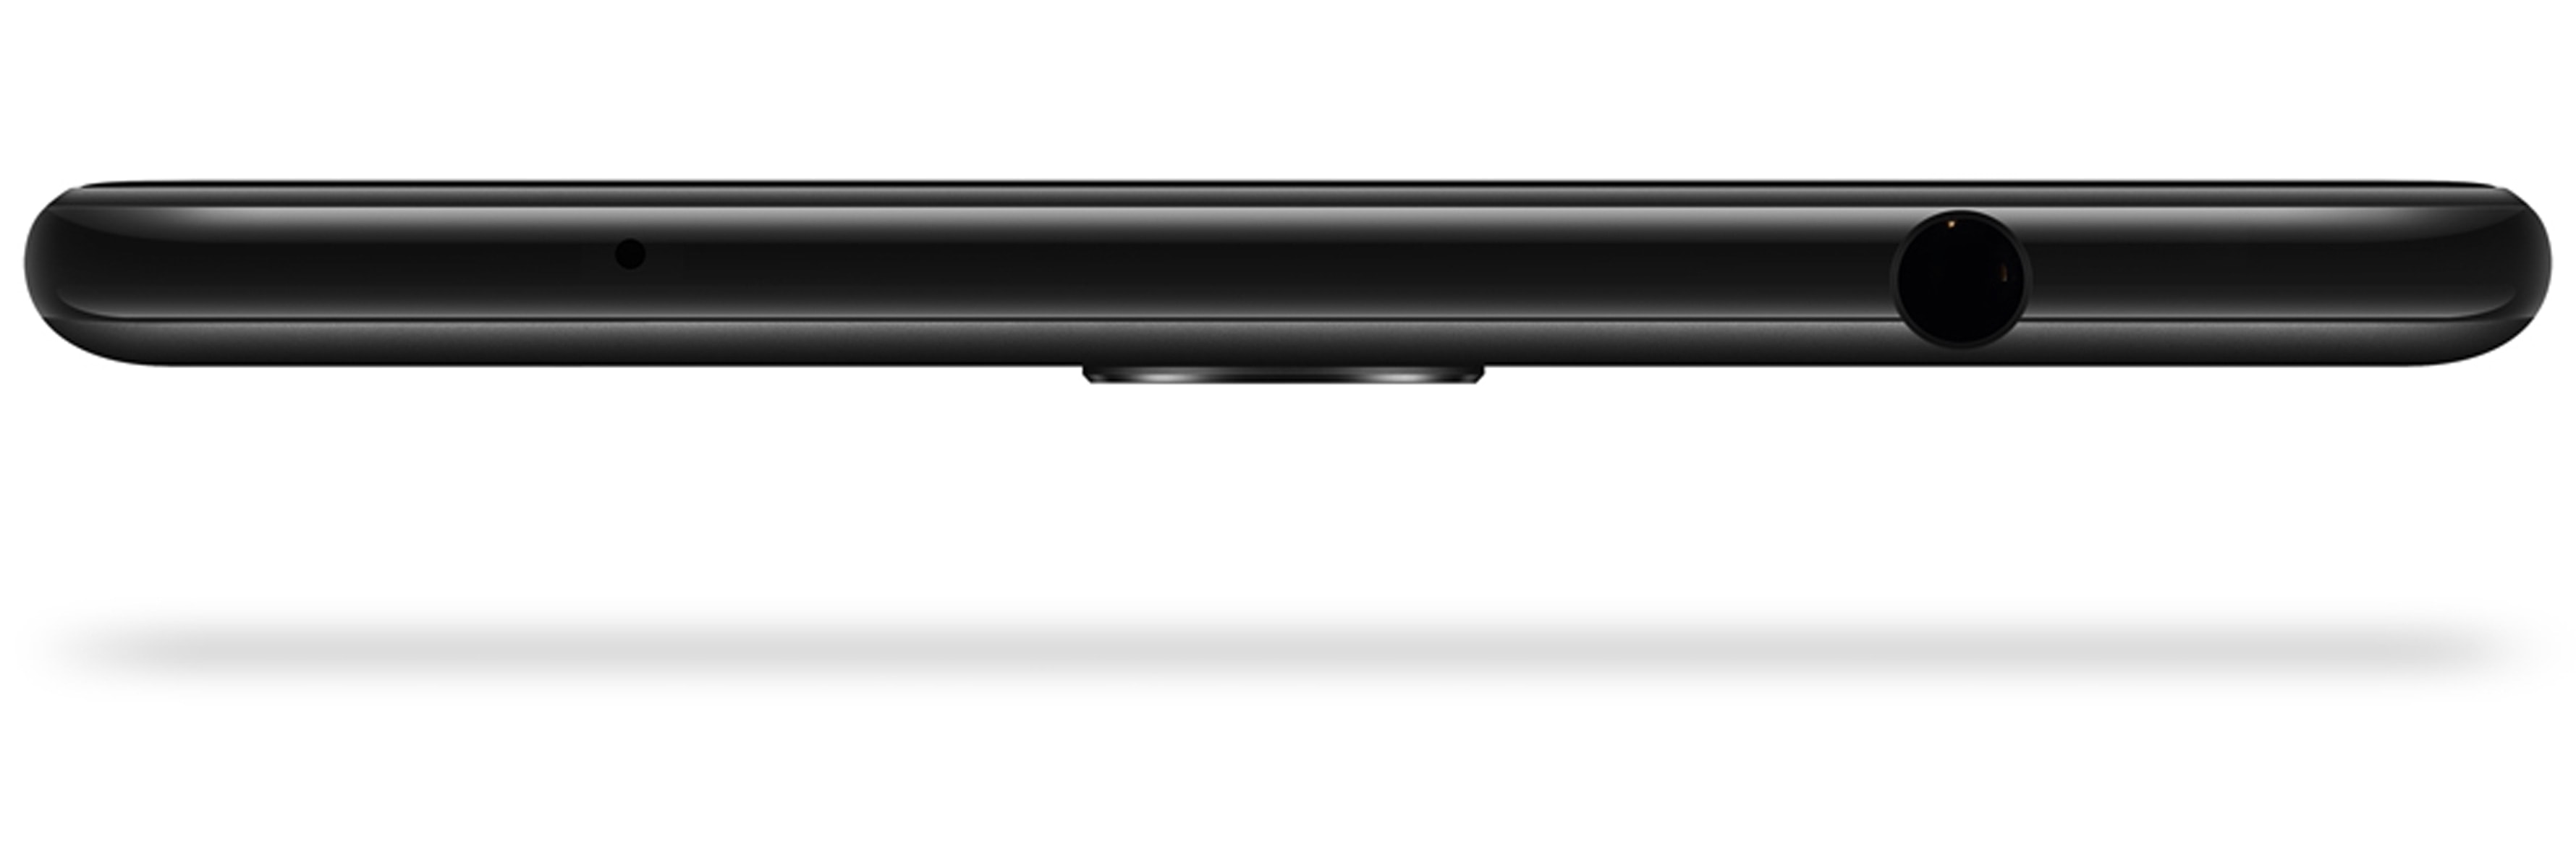 Huawei Smartphone Honor 6 C Pro, 5,2", 32 GB, schwarz